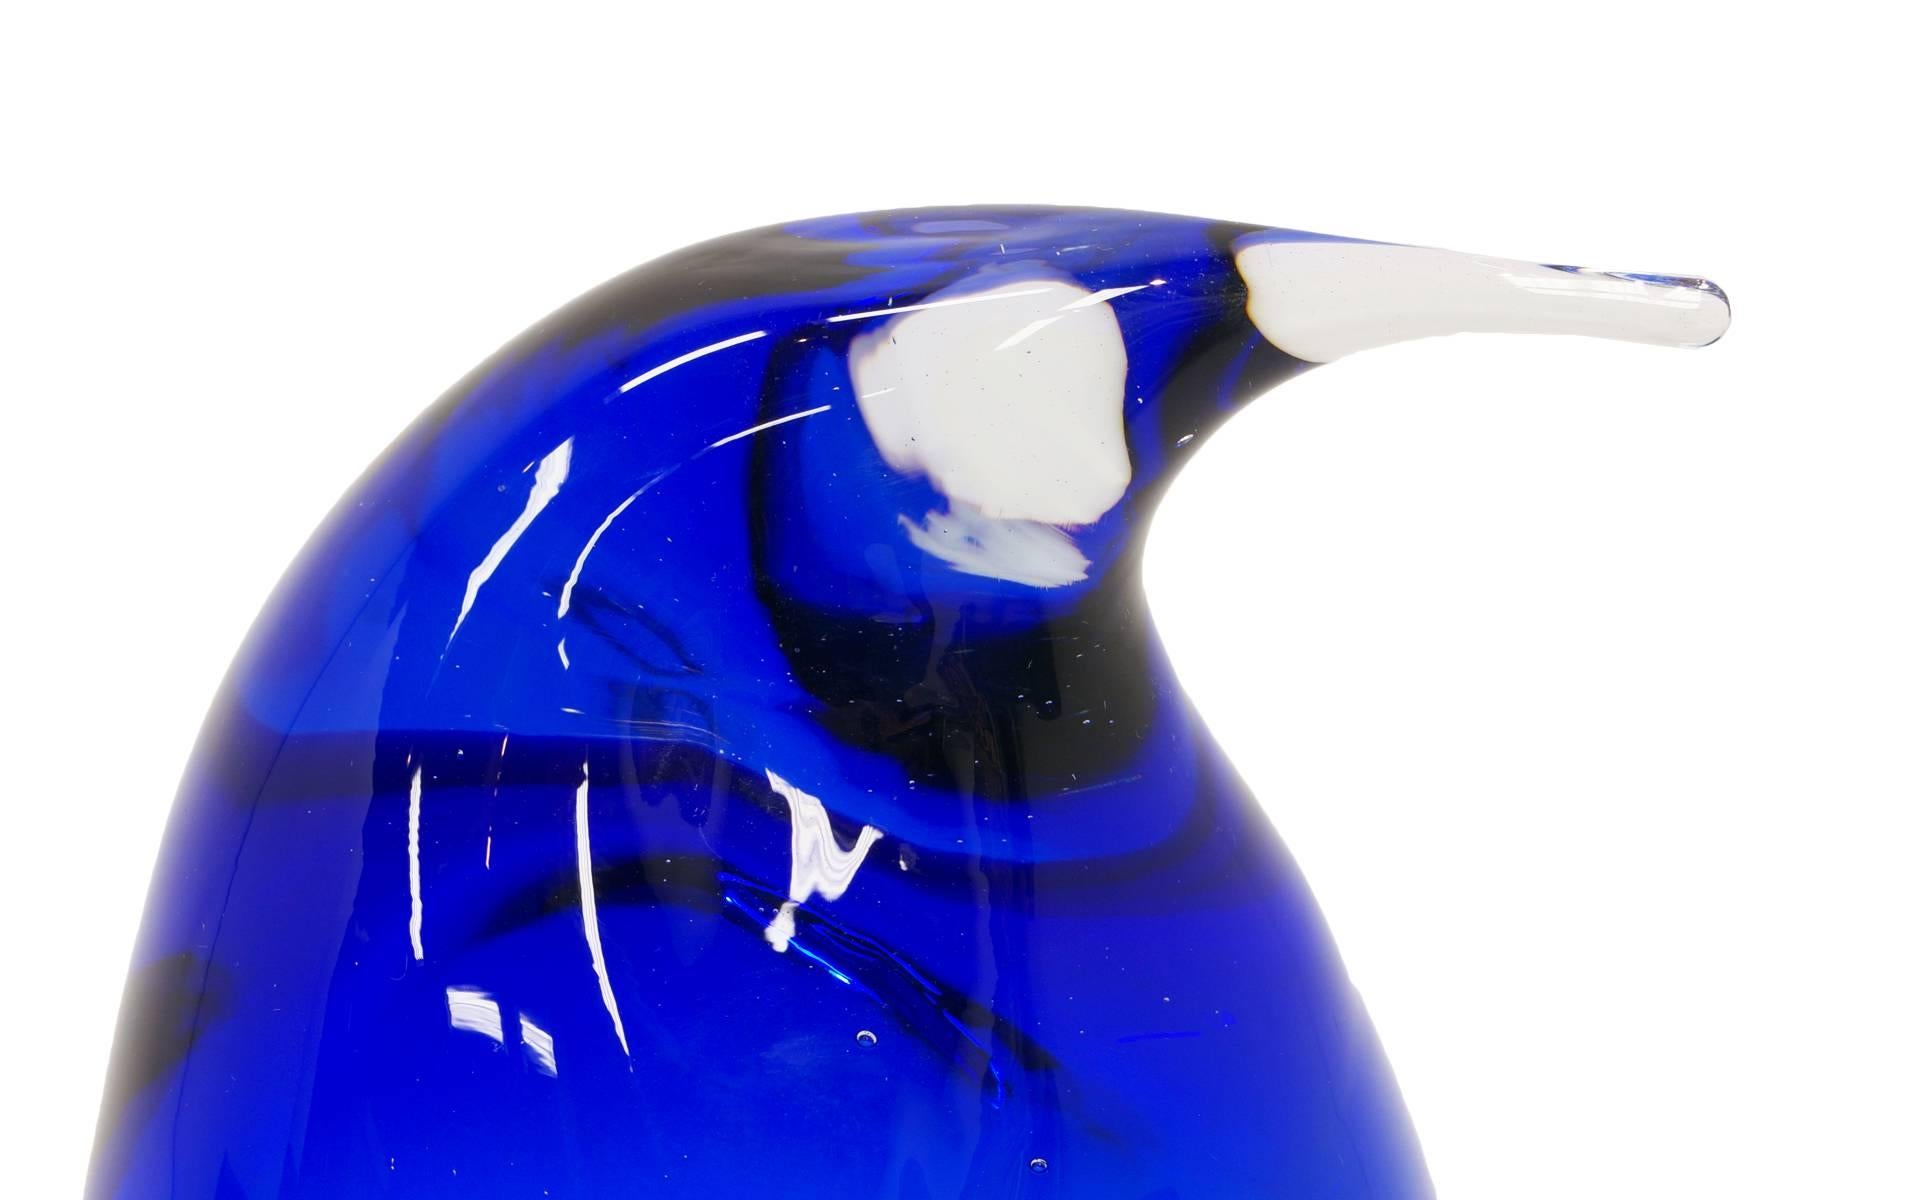 Mid-Century Modern Blenko Art Glass Penguin, livraison gratuite et rapide en vente